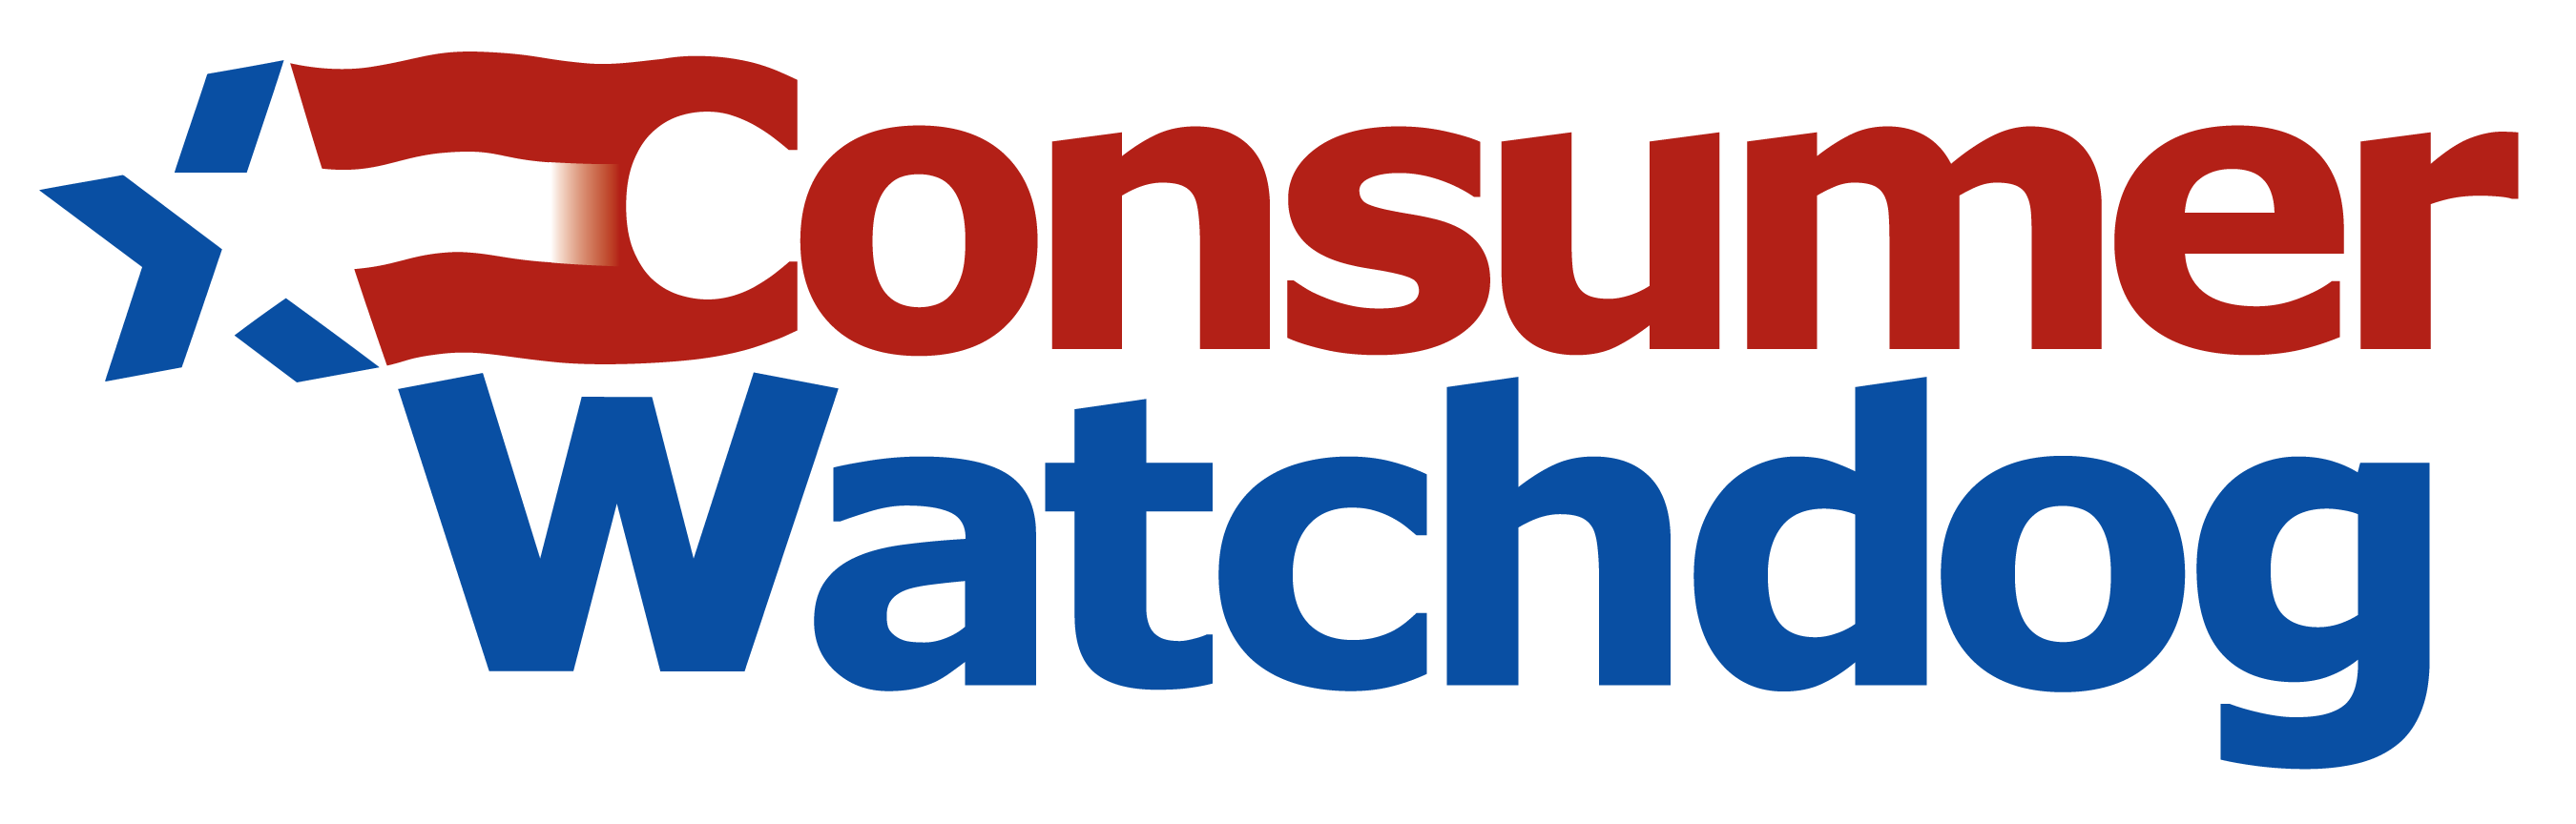 Consumer Watchdog Logo